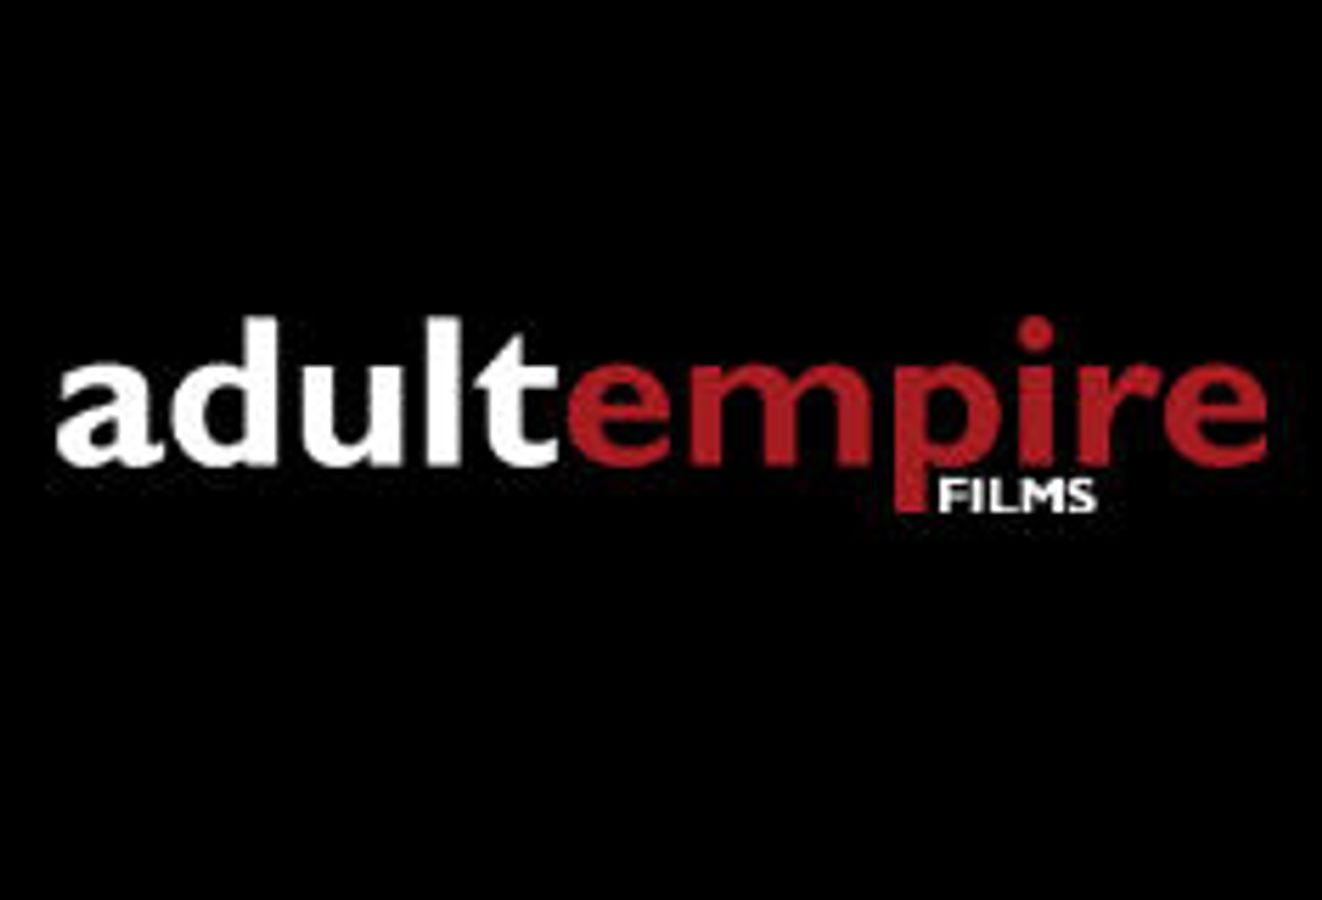 Adult Empire Films